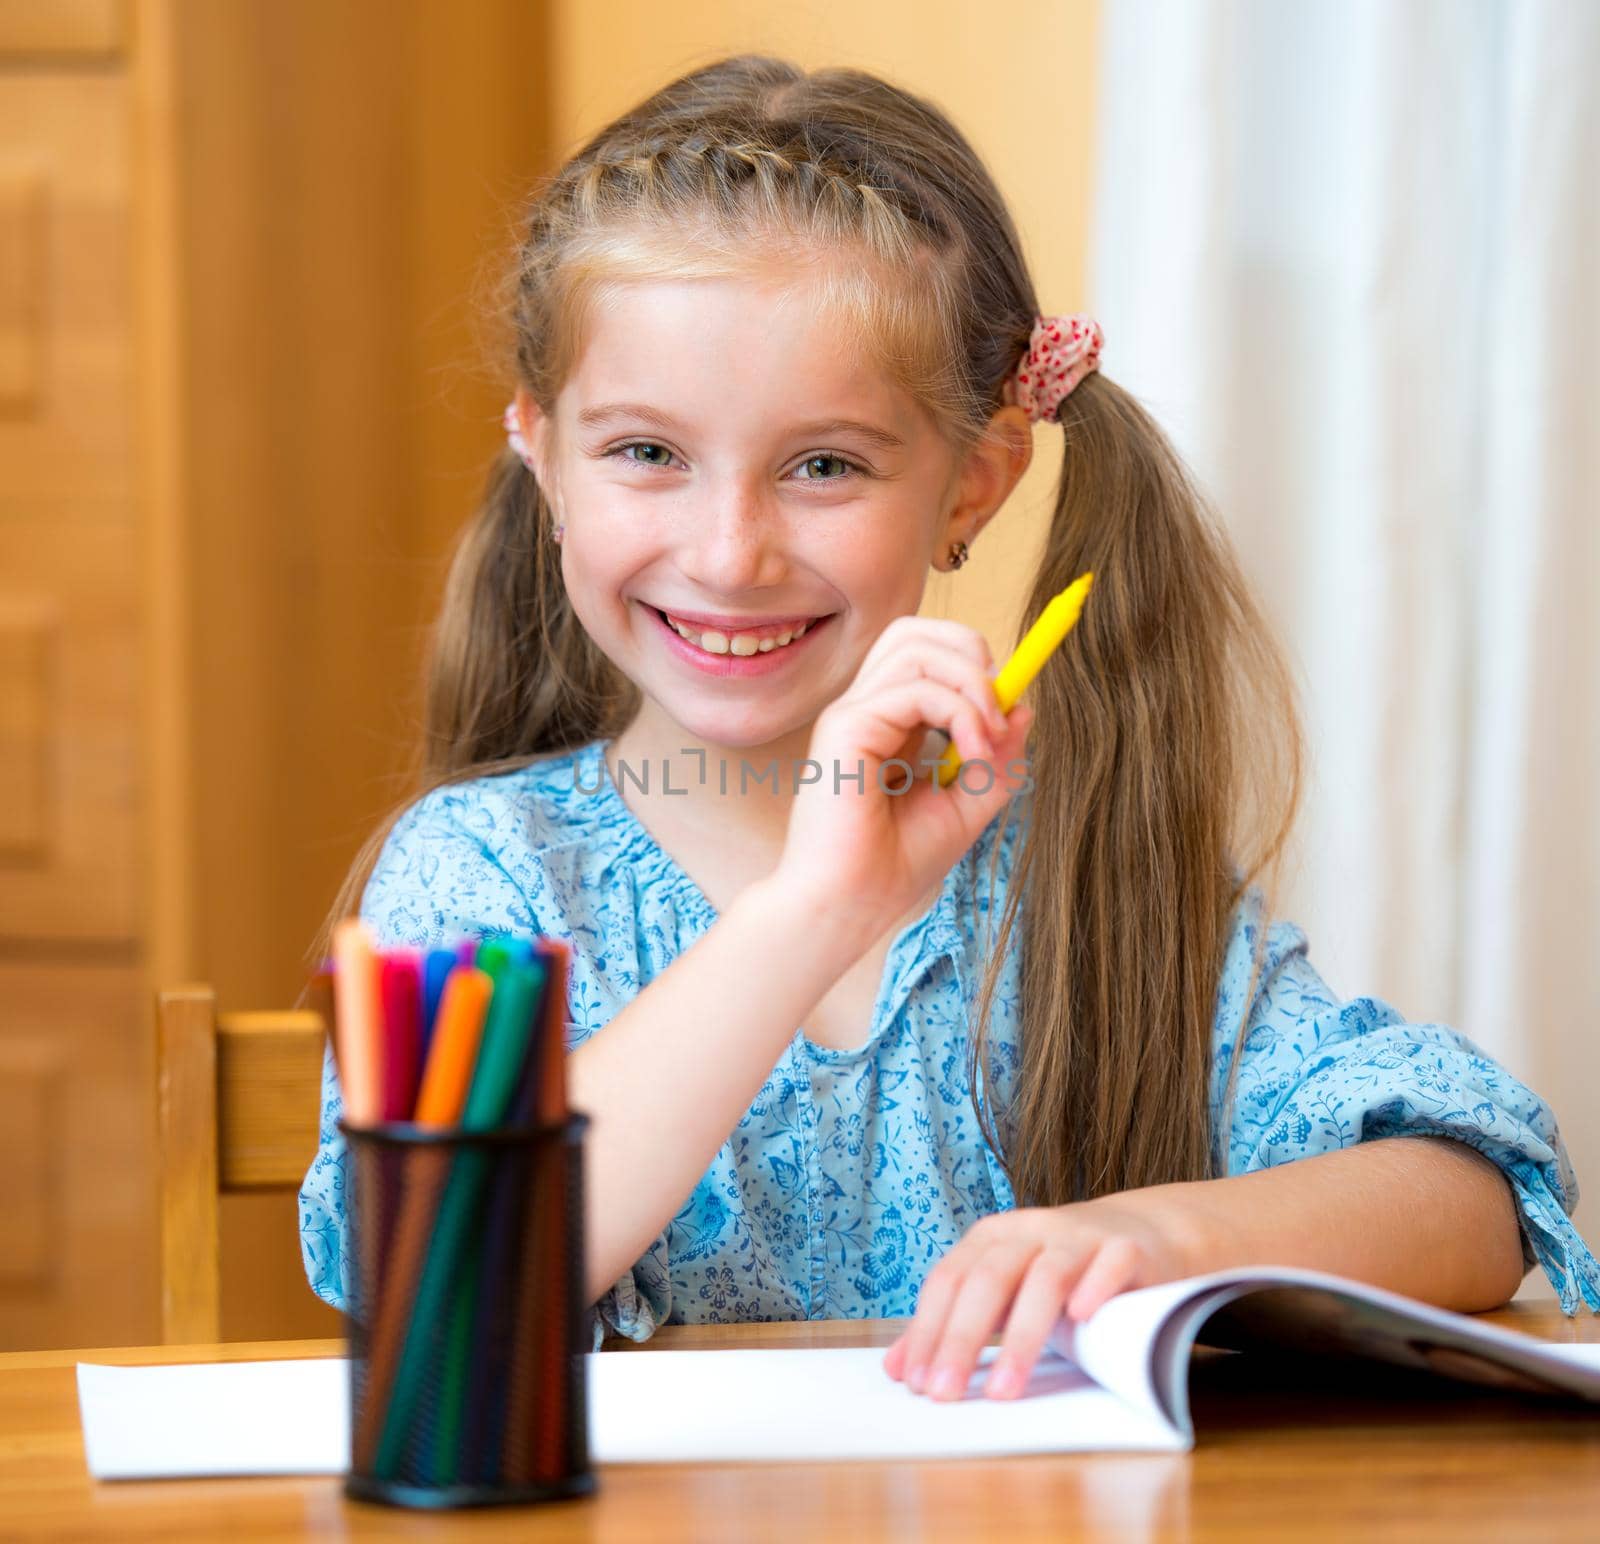 Schoolgirl with colored felt-tip pens in the classroom